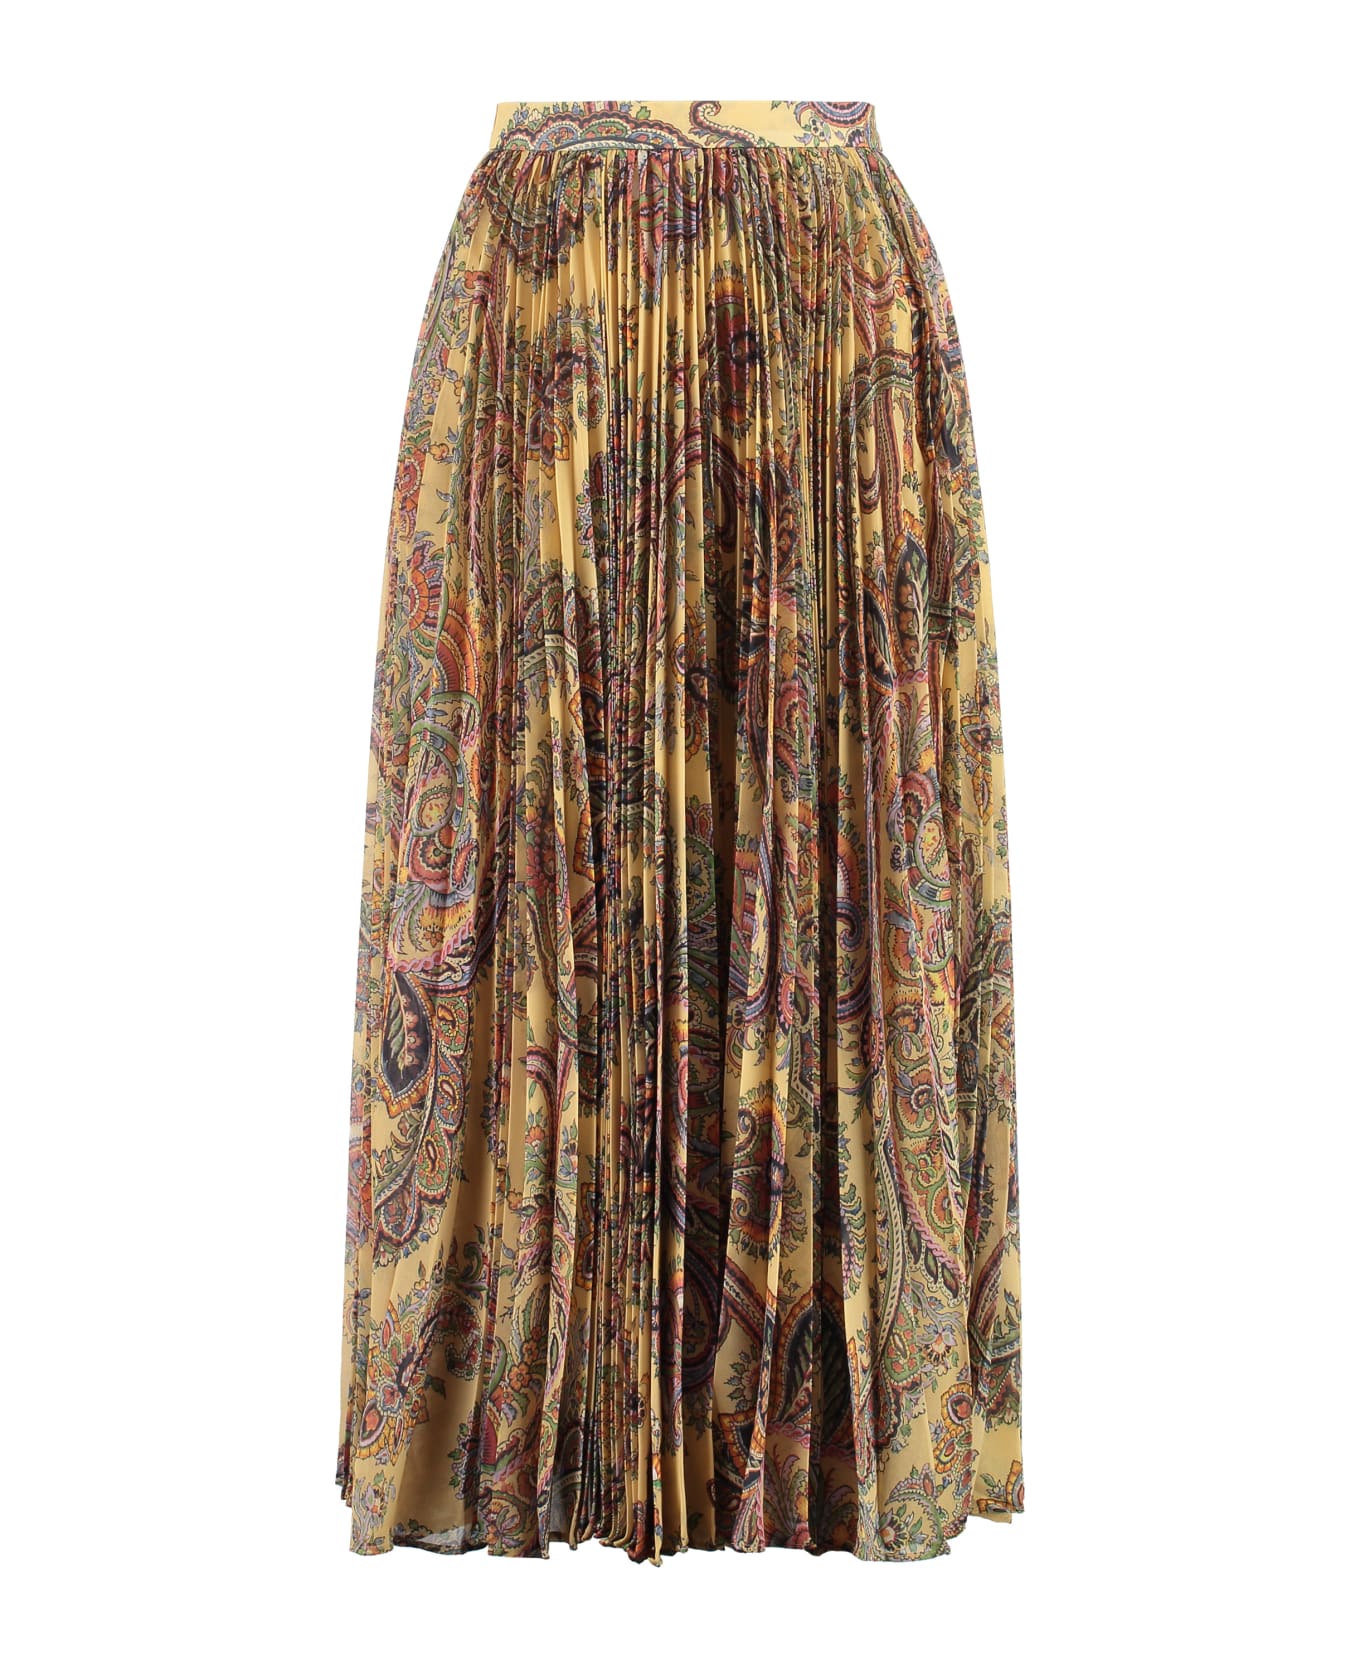 Etro Printed Pleated Skirt - Beige